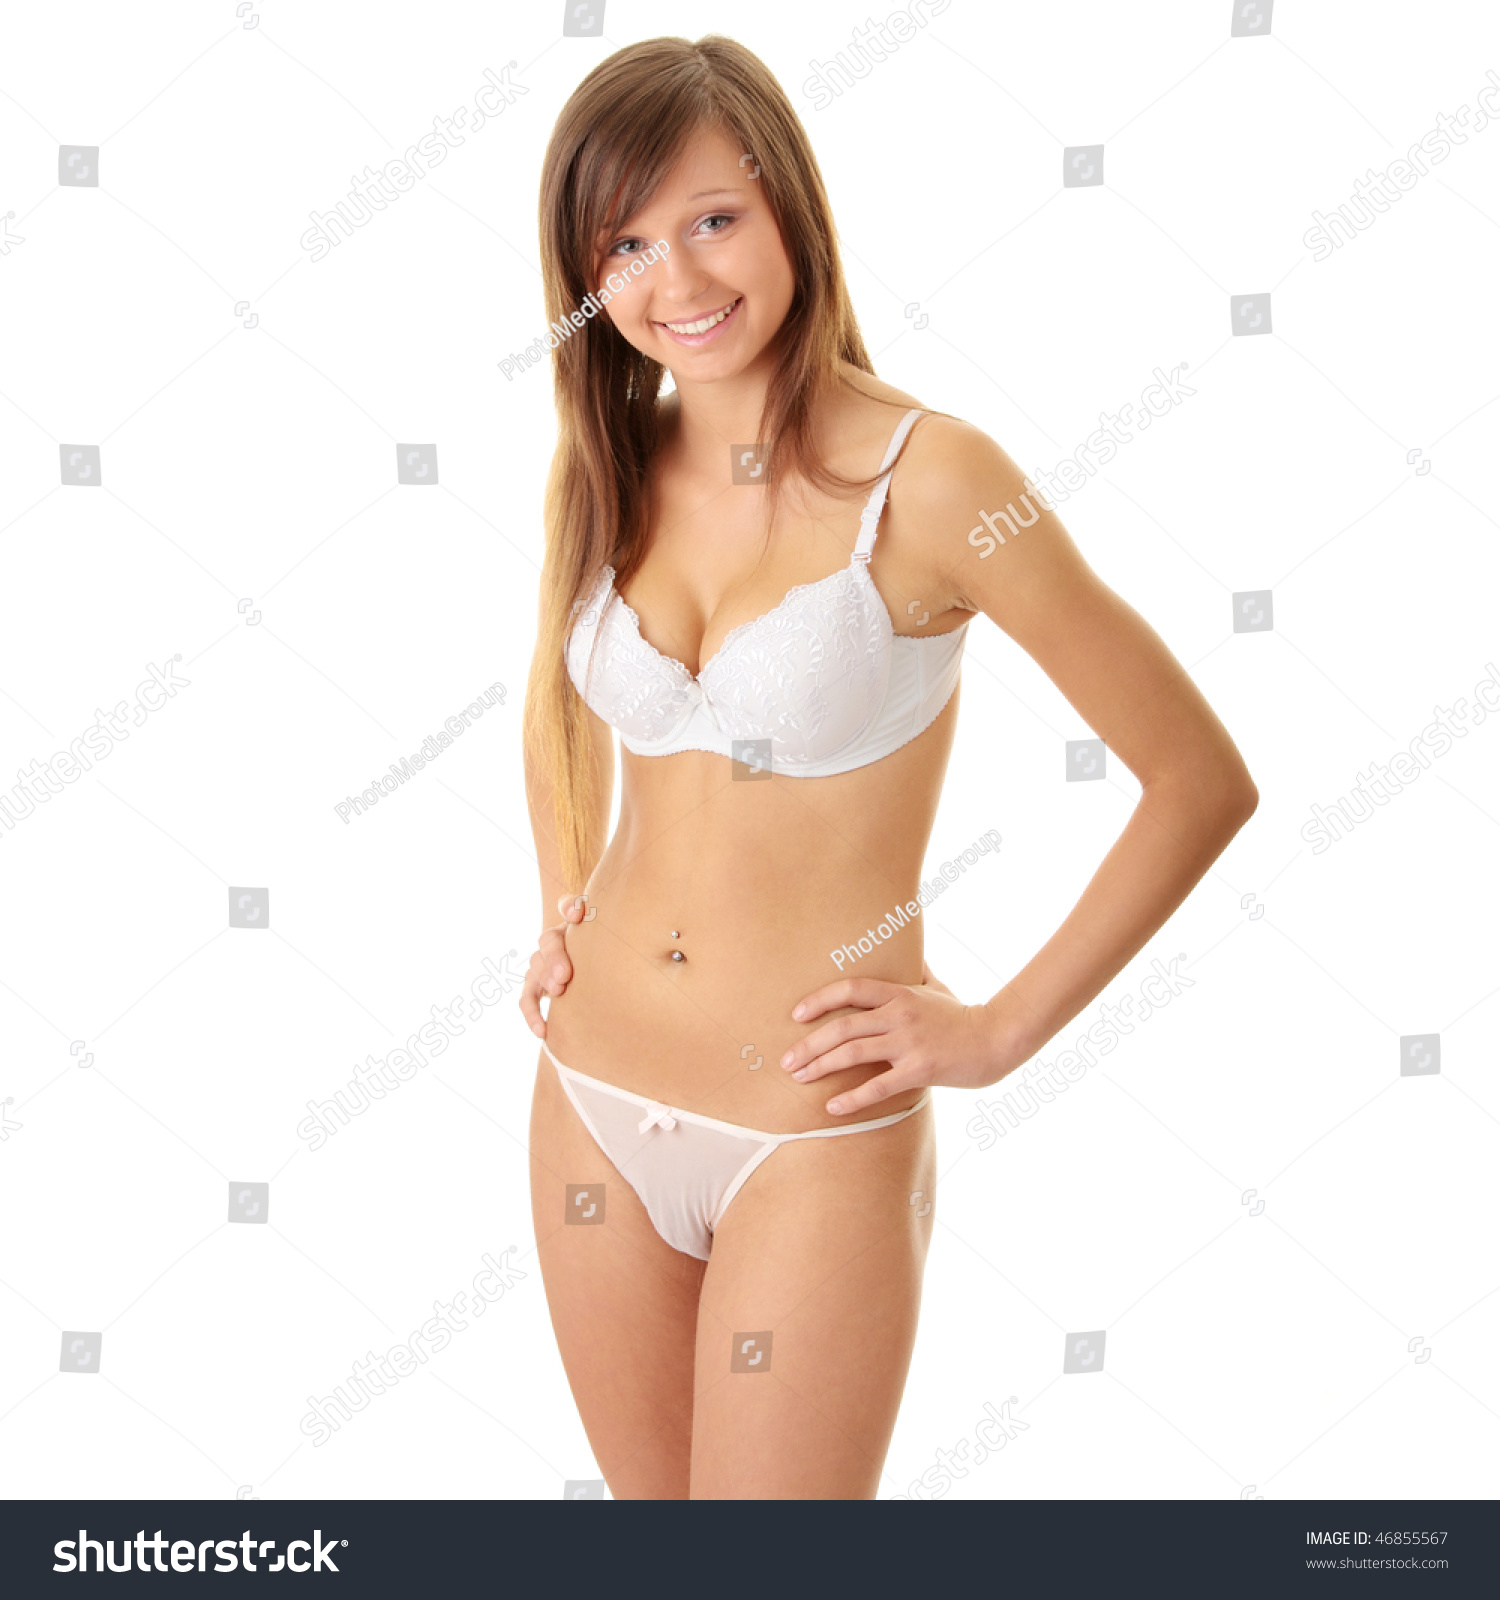 Porn girl in bras and underwear image